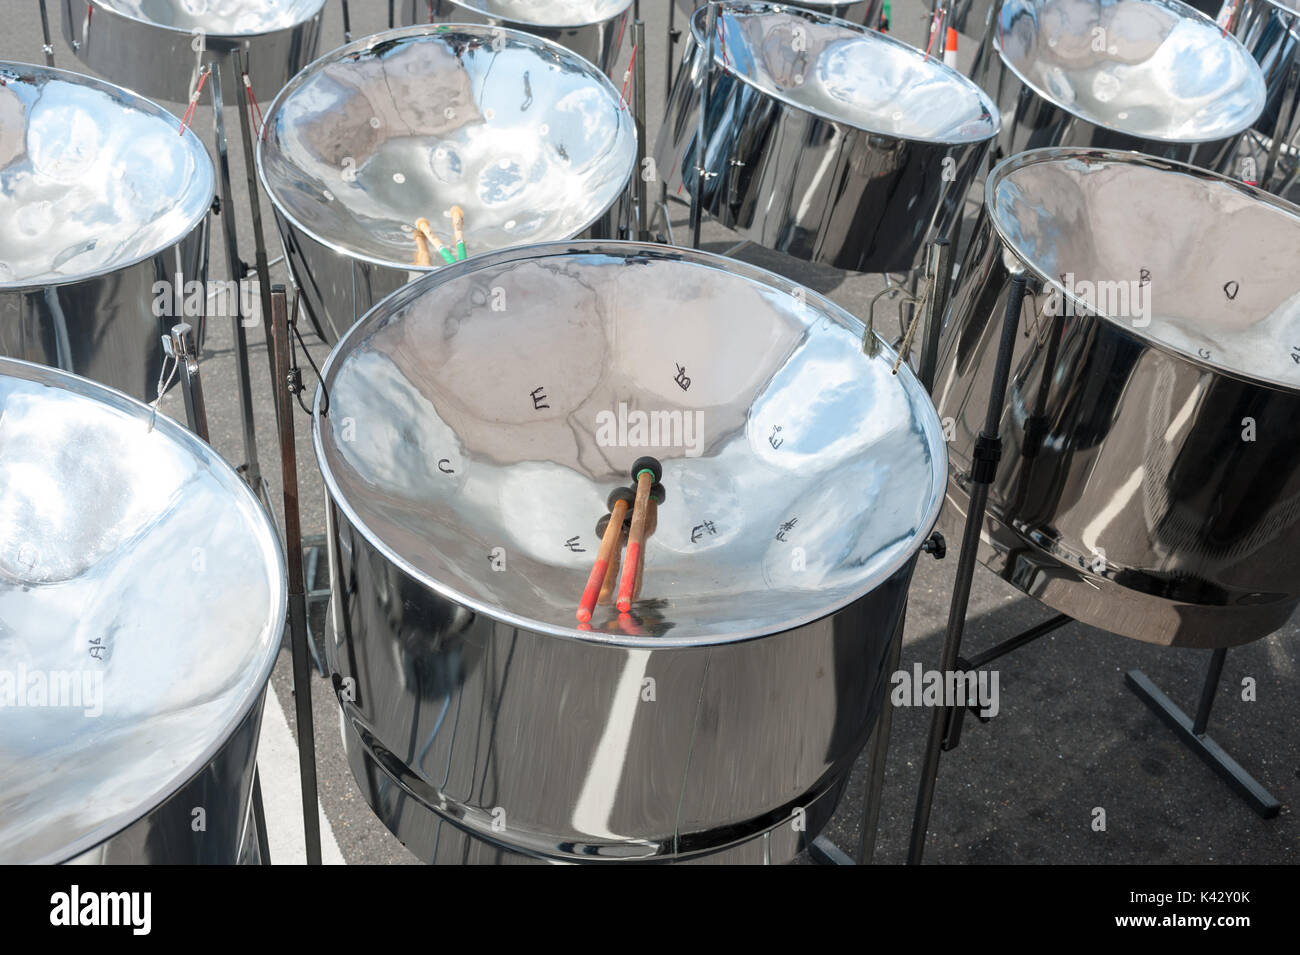 https://c8.alamy.com/comp/K42Y0K/steelpan-drums-also-known-as-steel-drums-and-sticks-K42Y0K.jpg